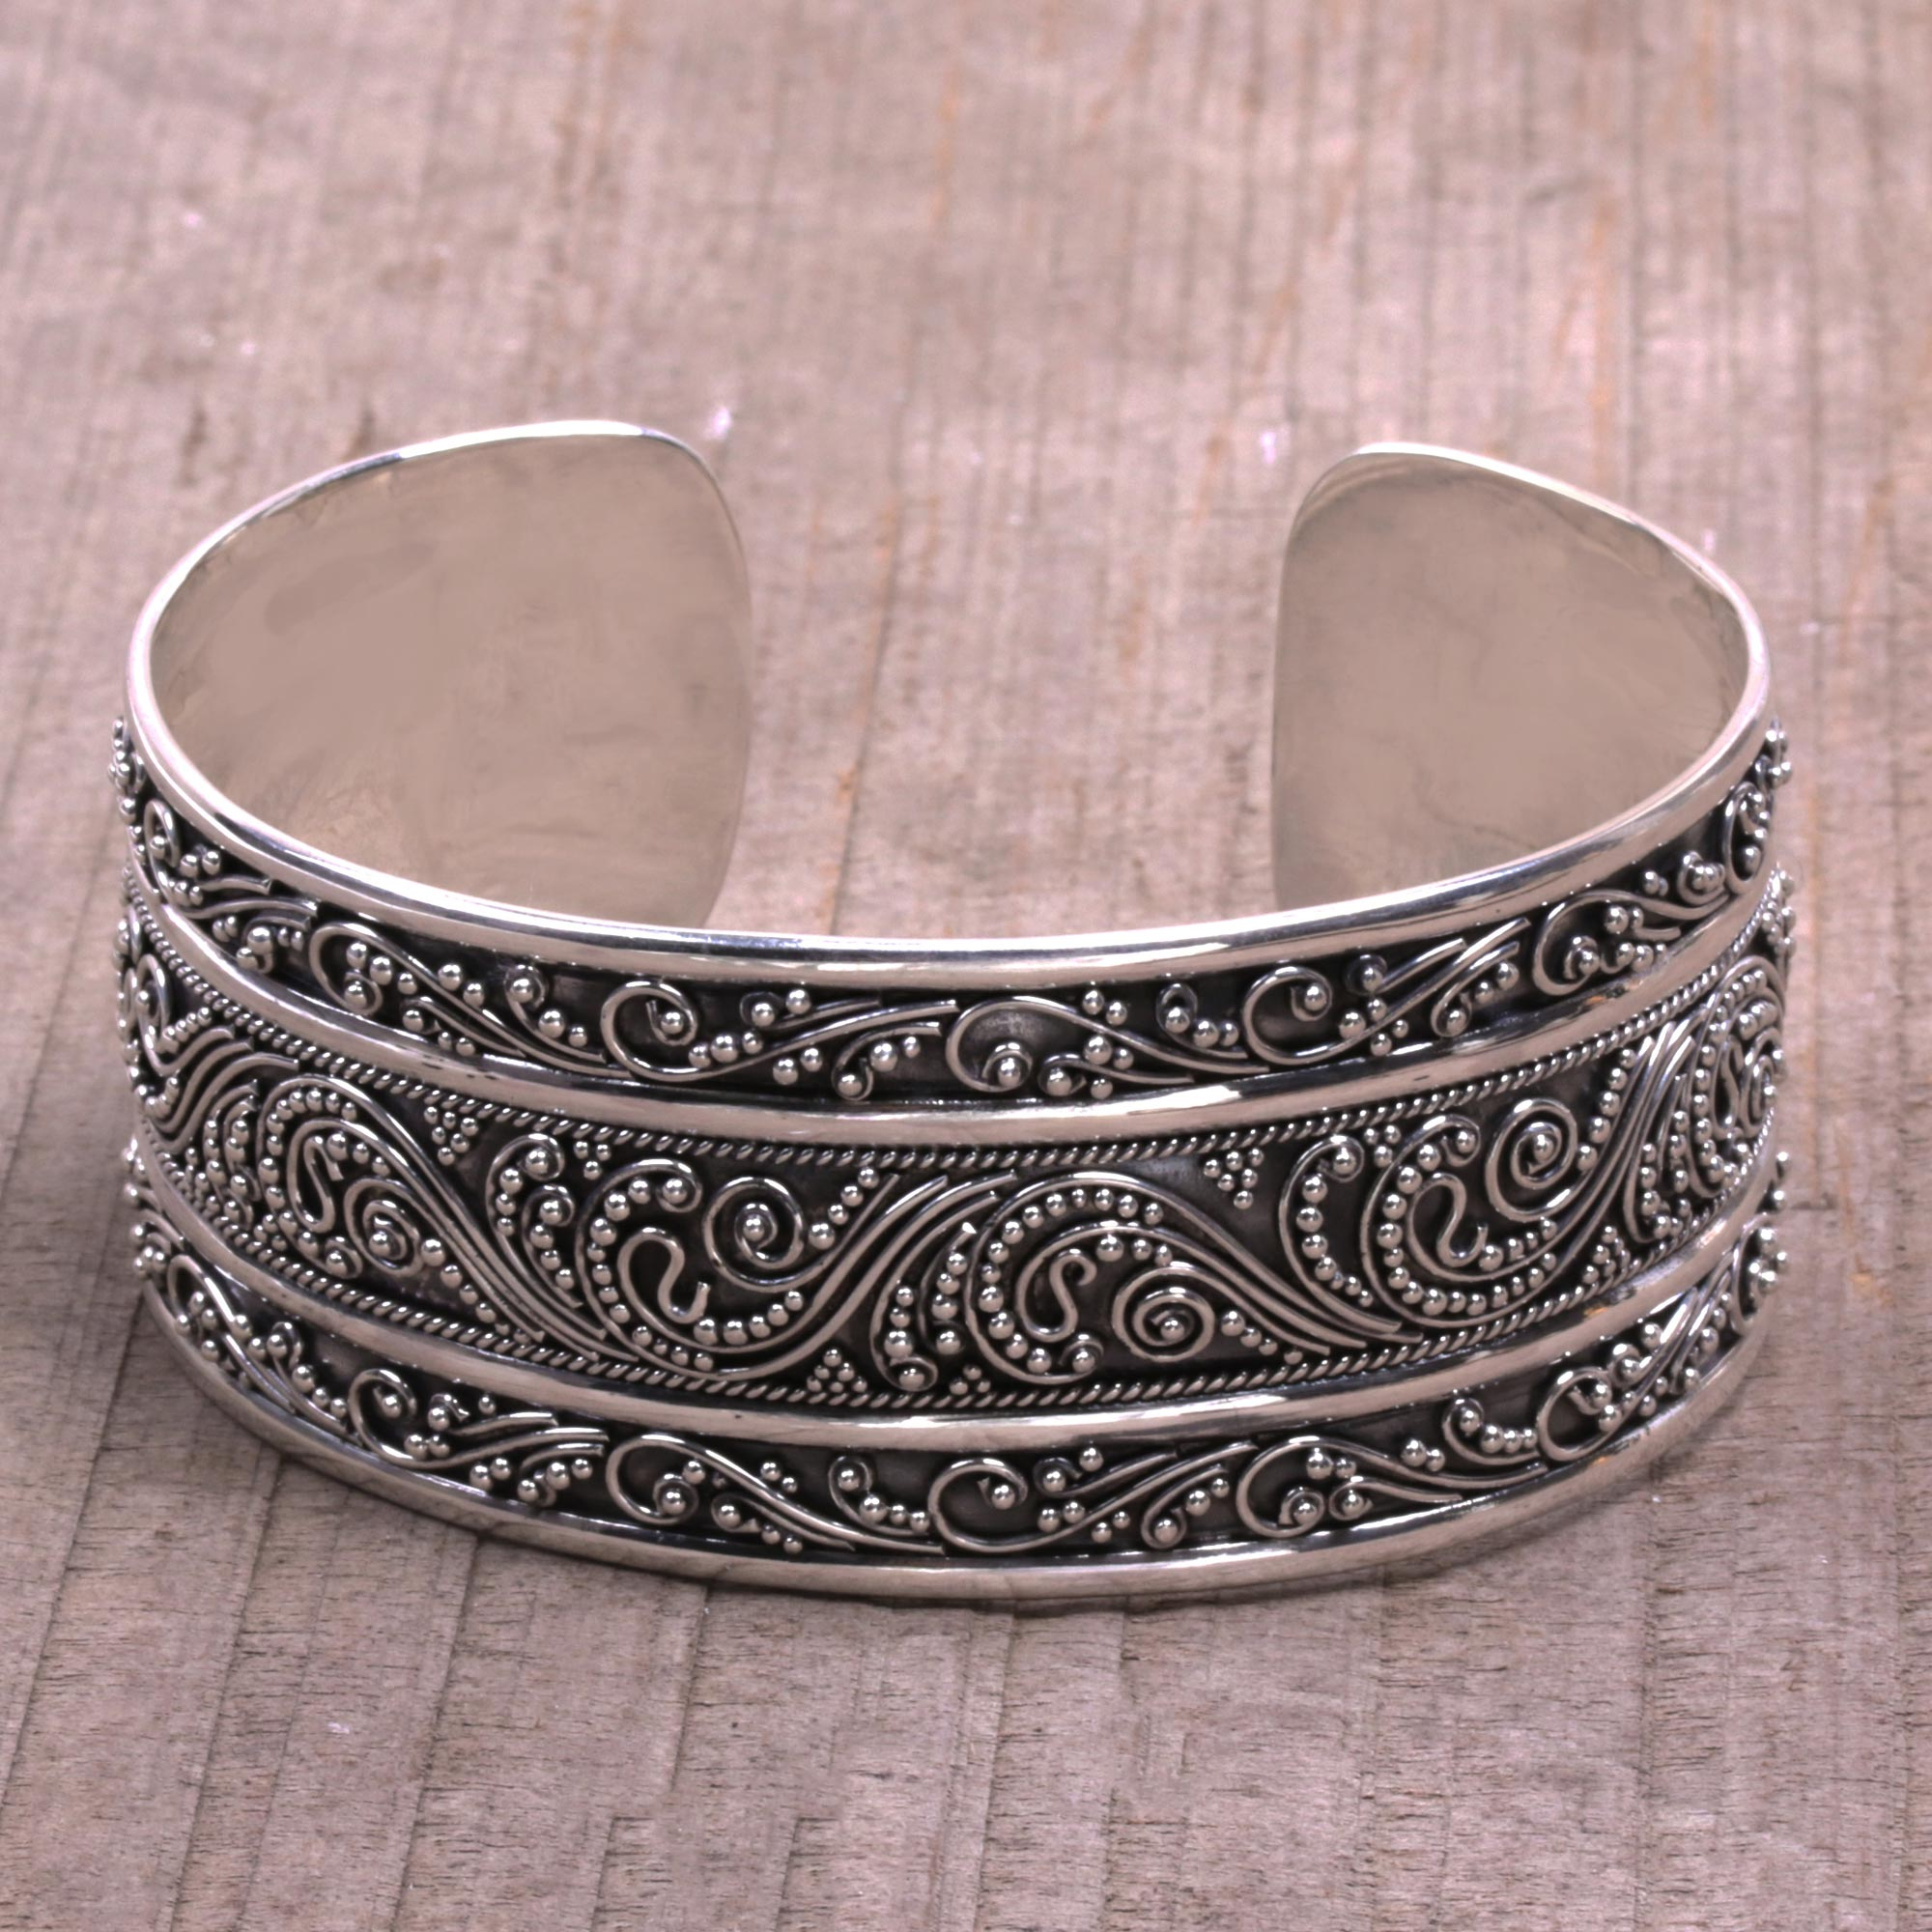 Intricate Sterling Silver Cuff Bracelet from Bali - Temple Vine | NOVICA